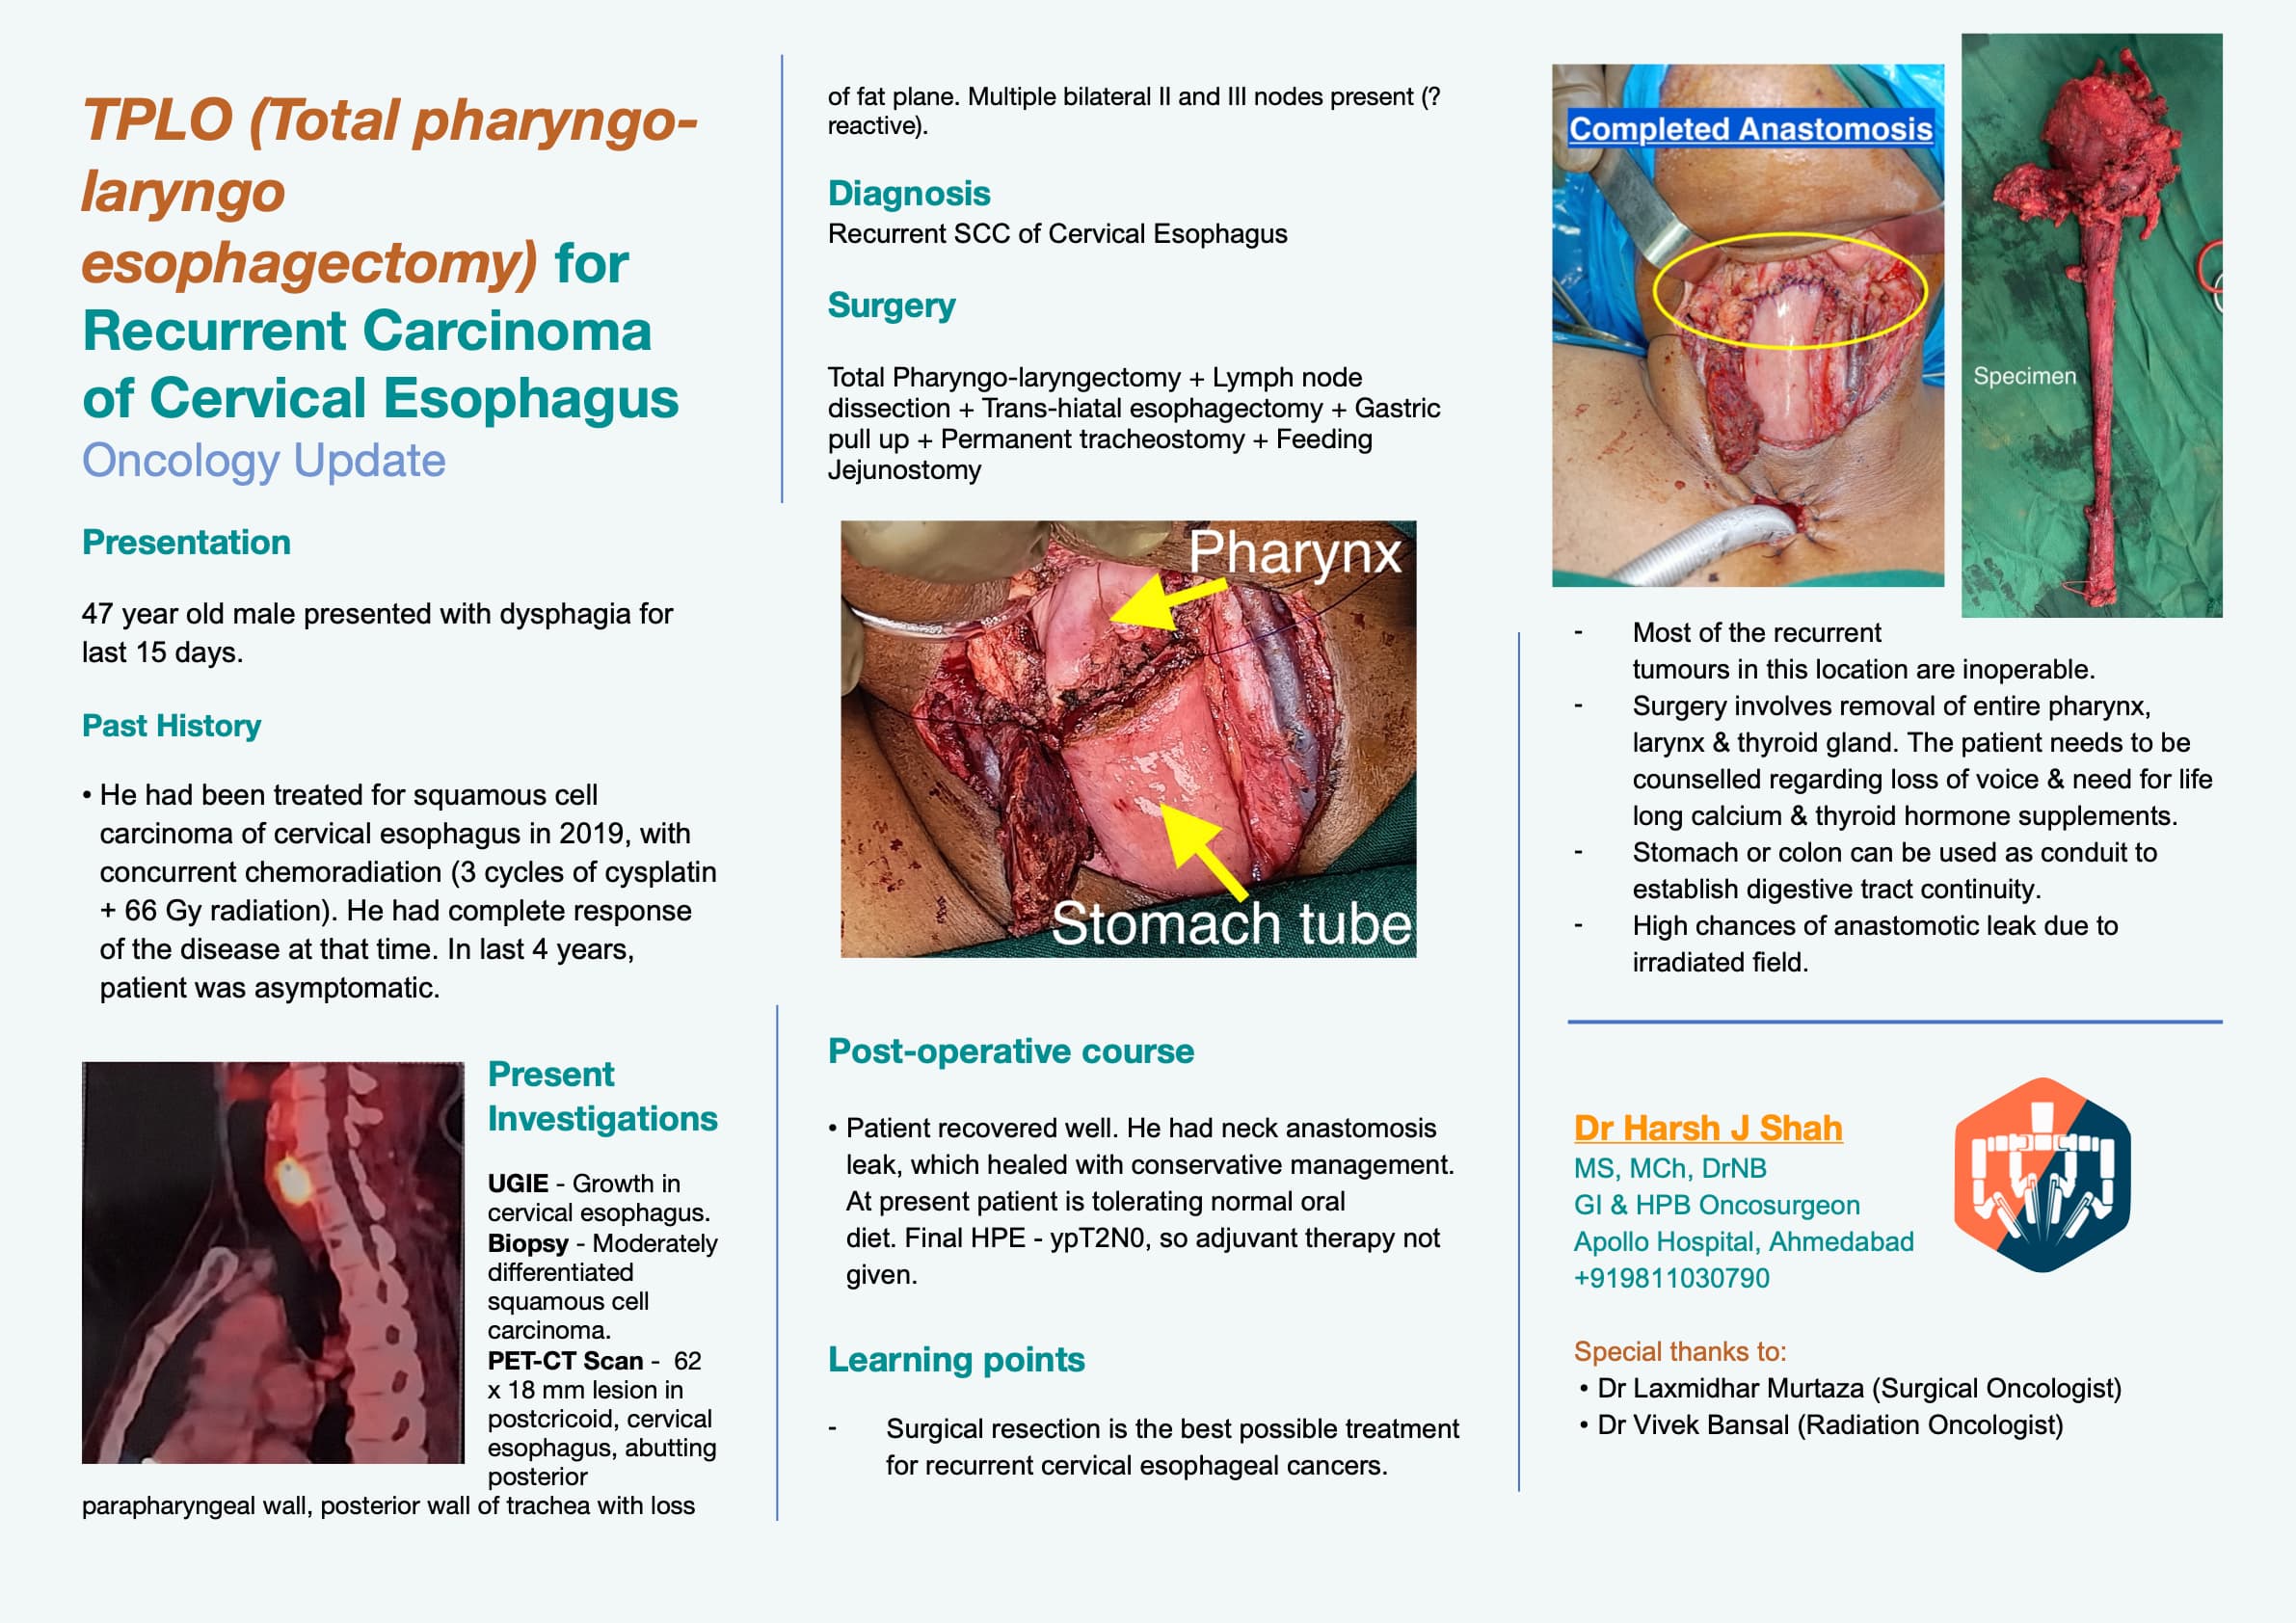 TPLO (Total pharyngo-laryngo esophagectomy) for Recurrent Carcinoma of Cervical Esophagus